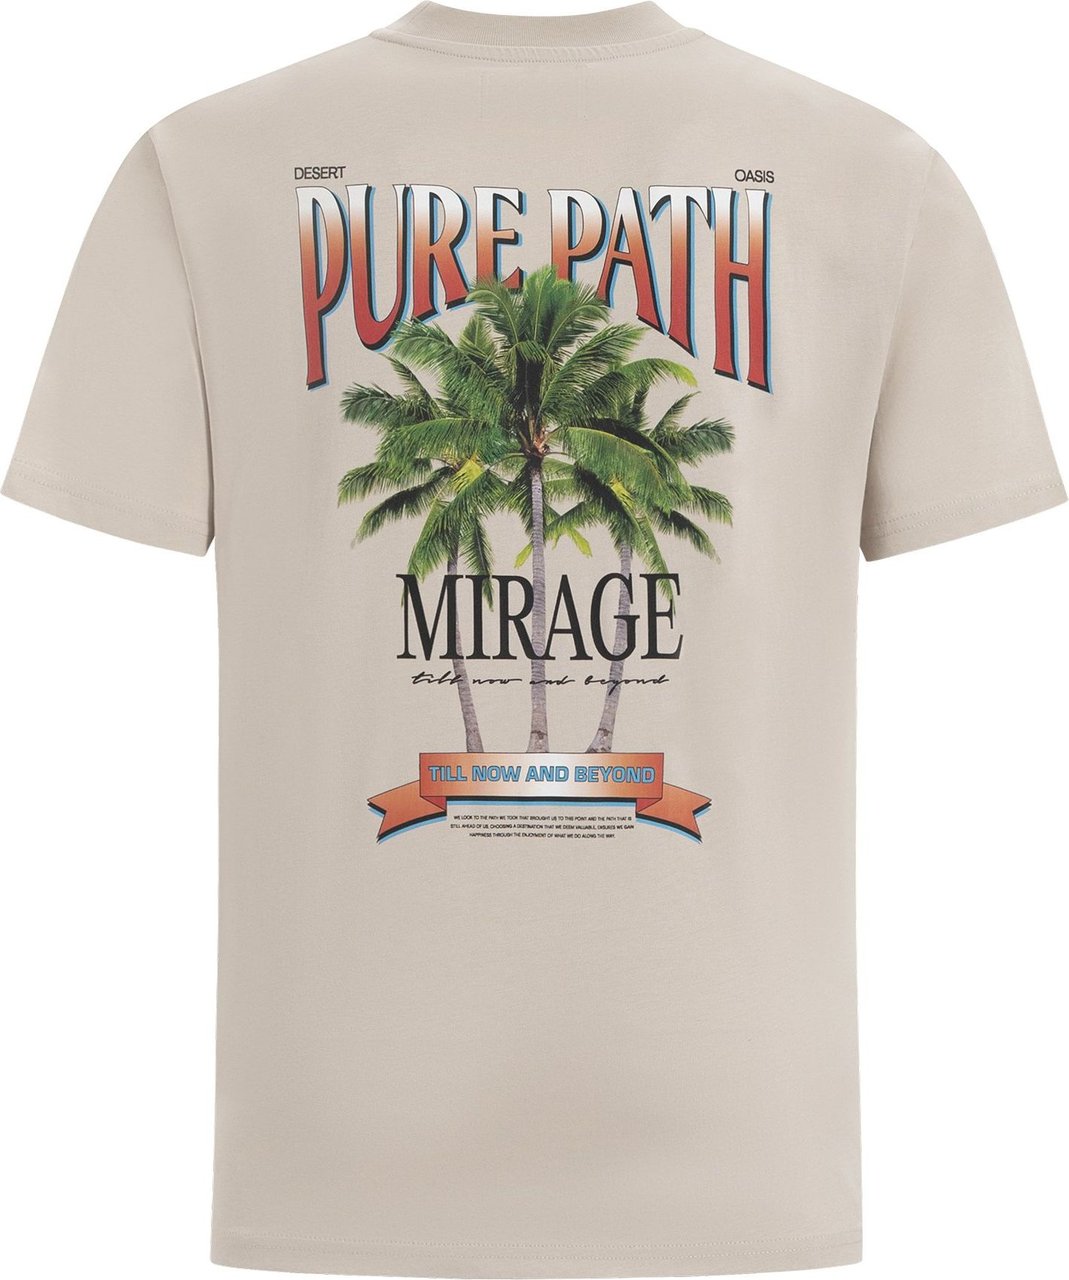 Pure Path Mirage Tee Sand Beige